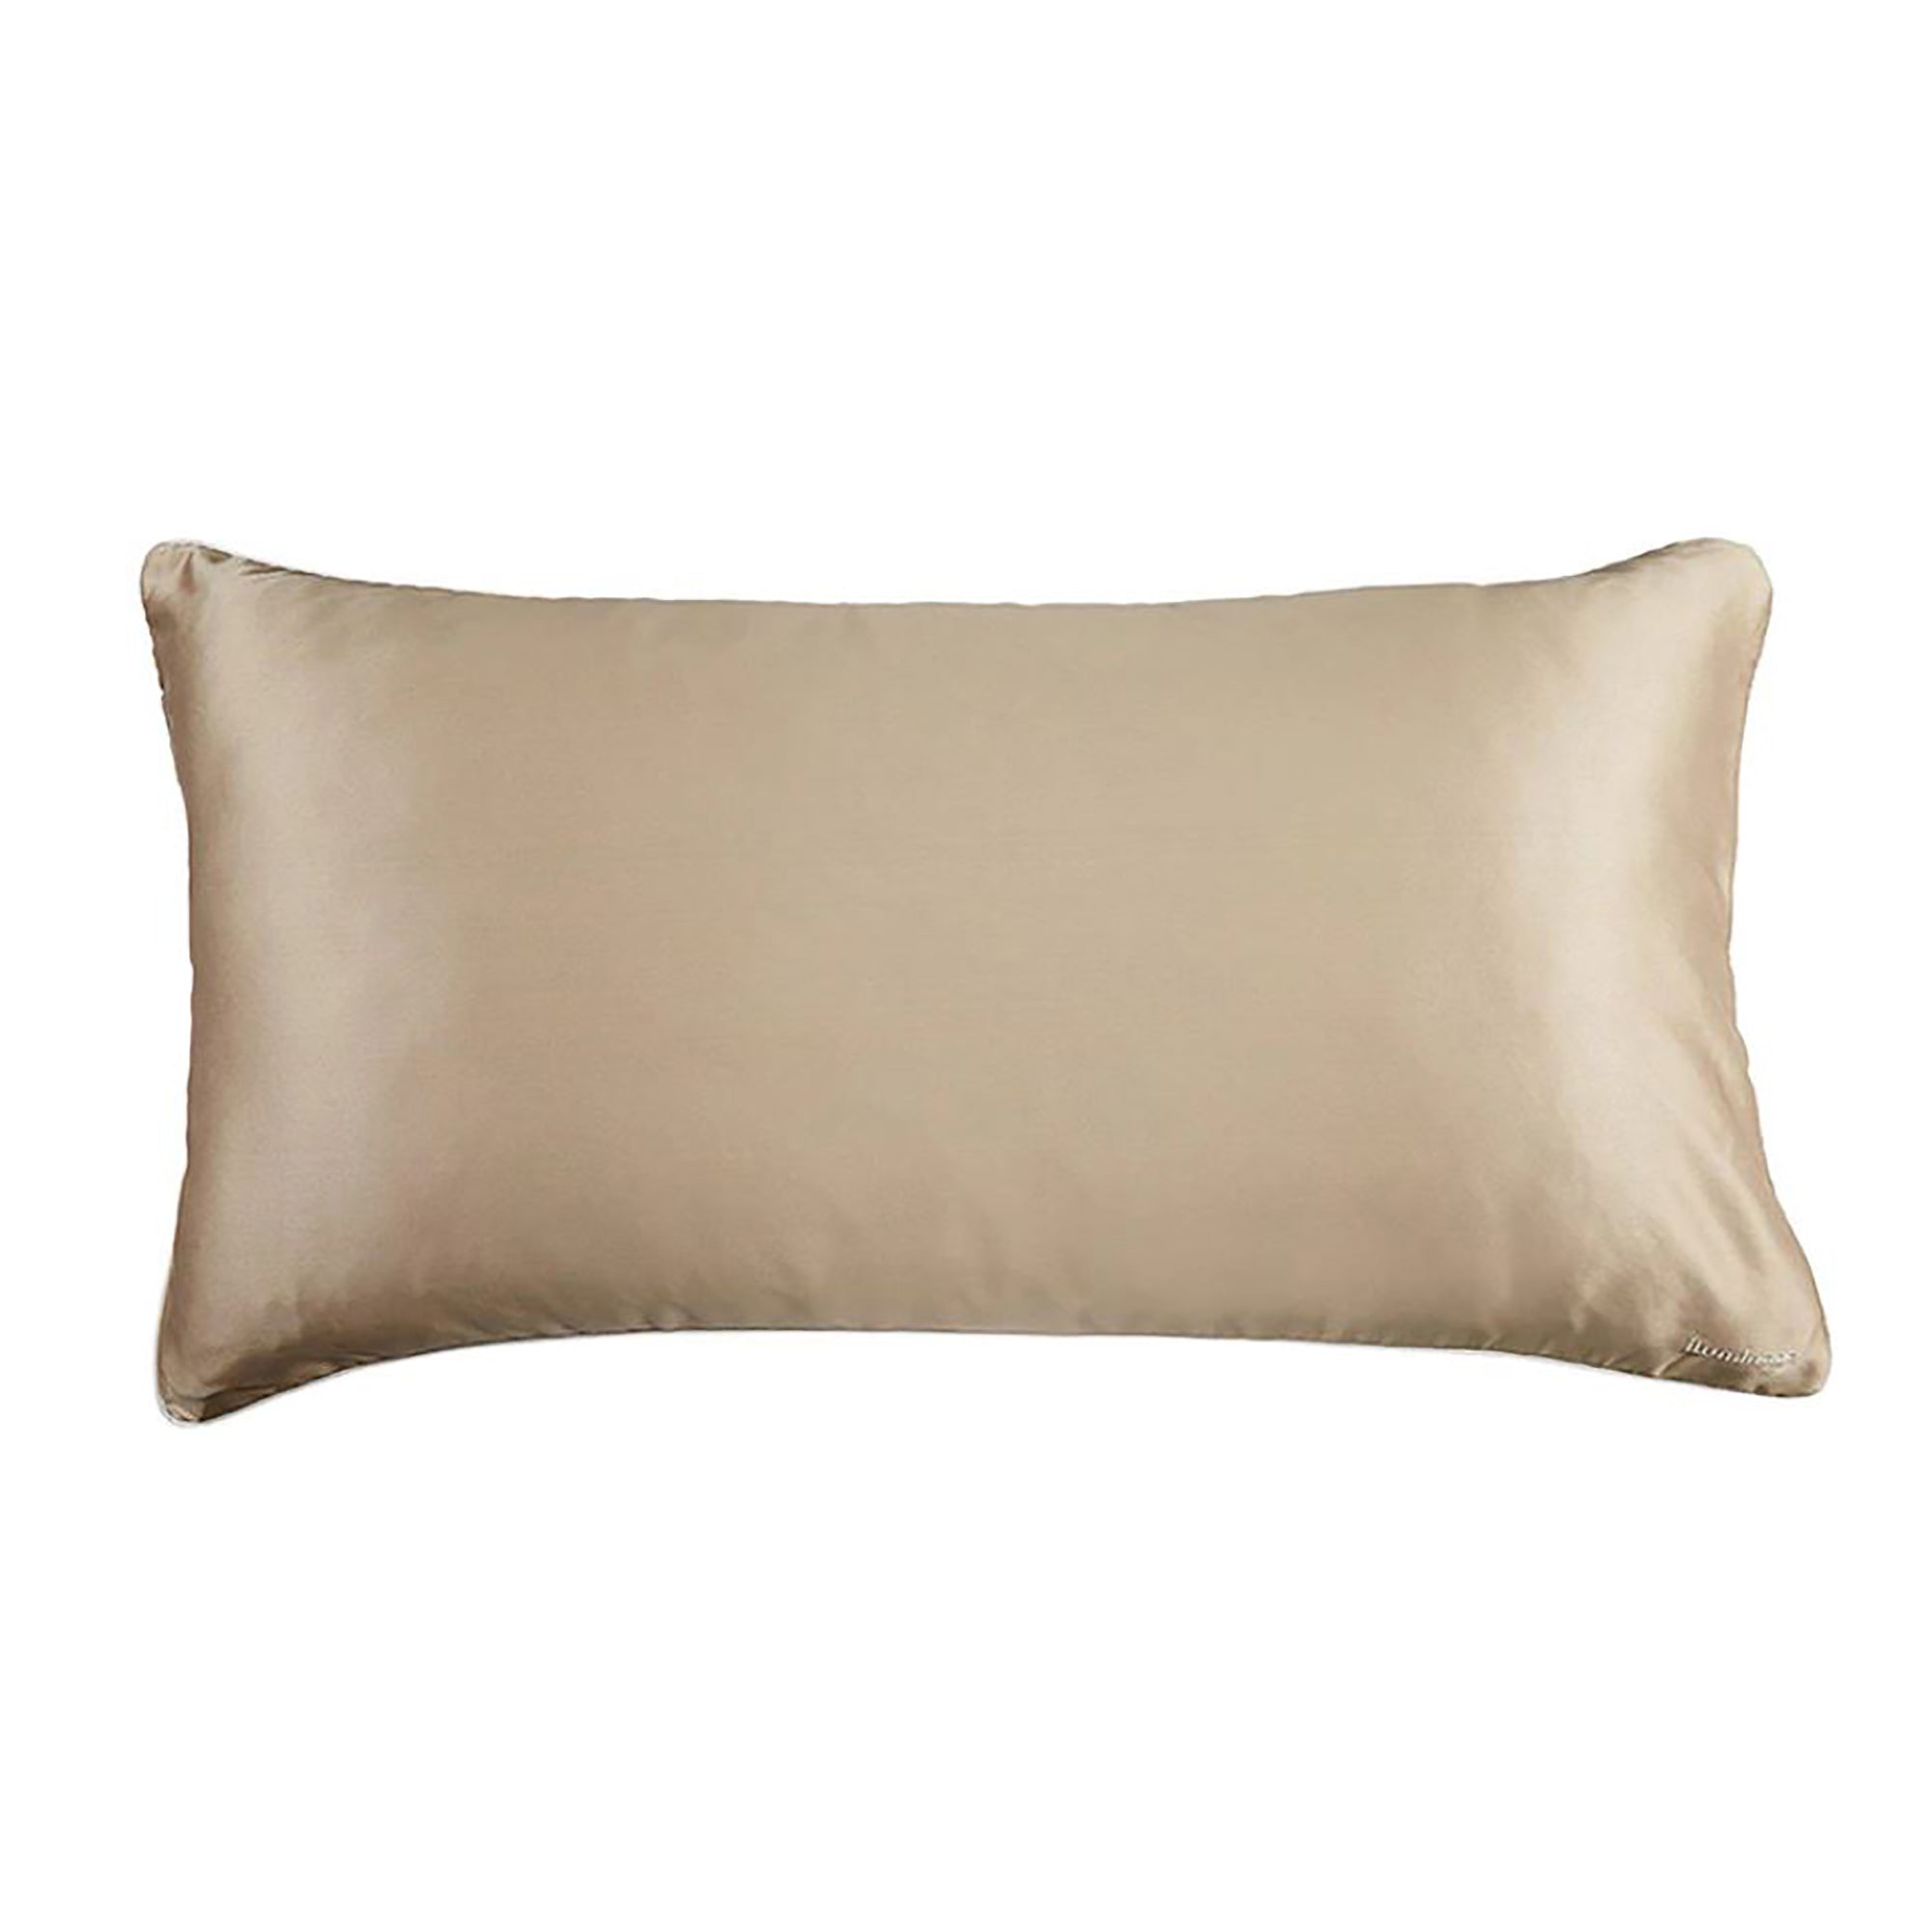 Iluminage Skin Rejuvenating Pillowcase with Anti-Aging Copper Technology / GOLD